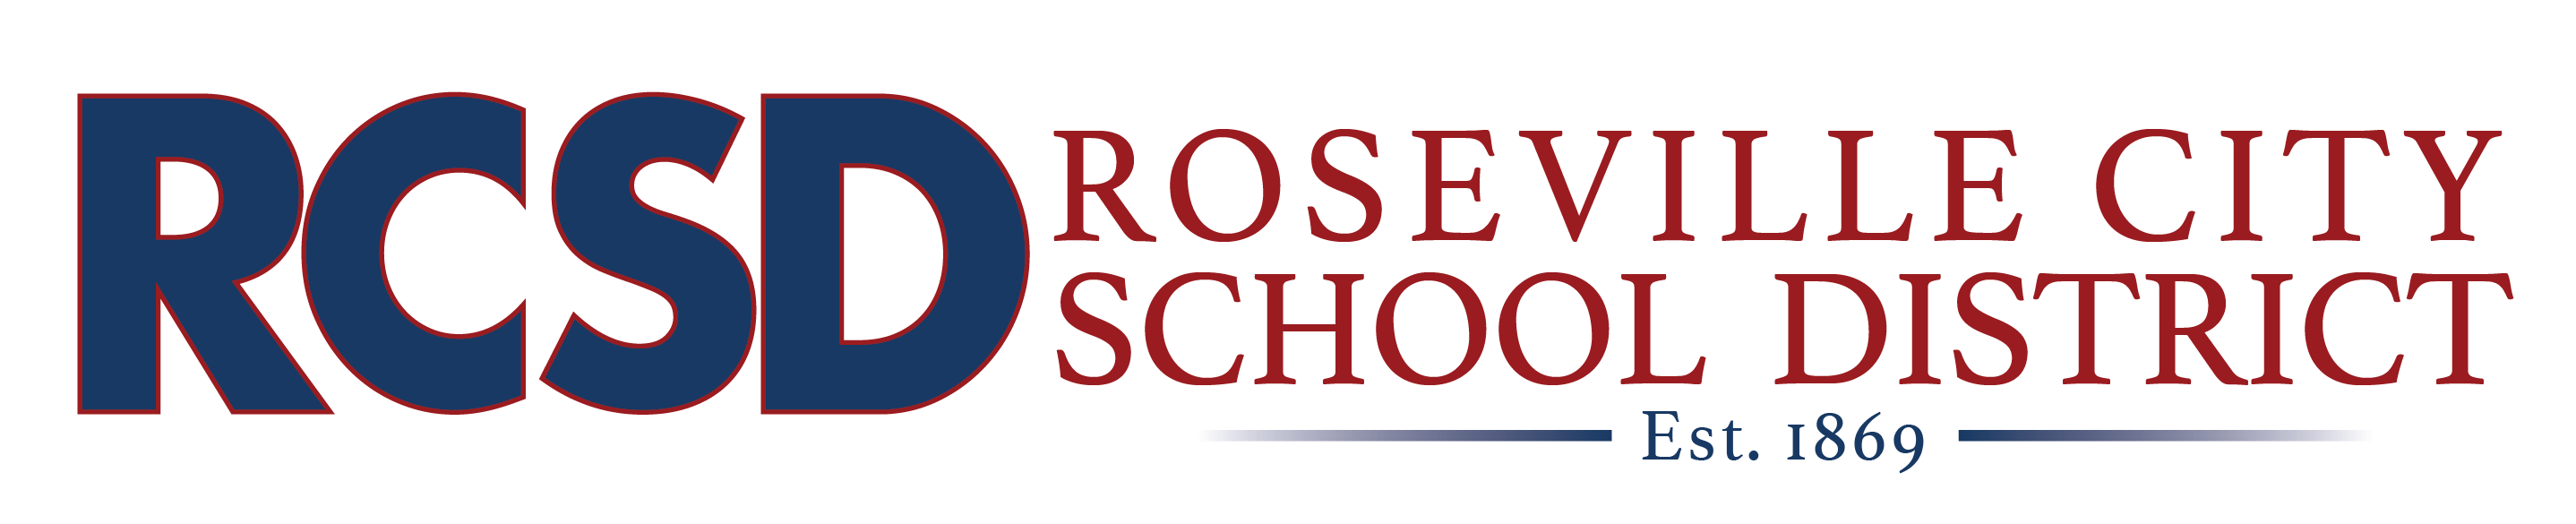 Roseville City School District (Preschool to 8th Grade) Logo